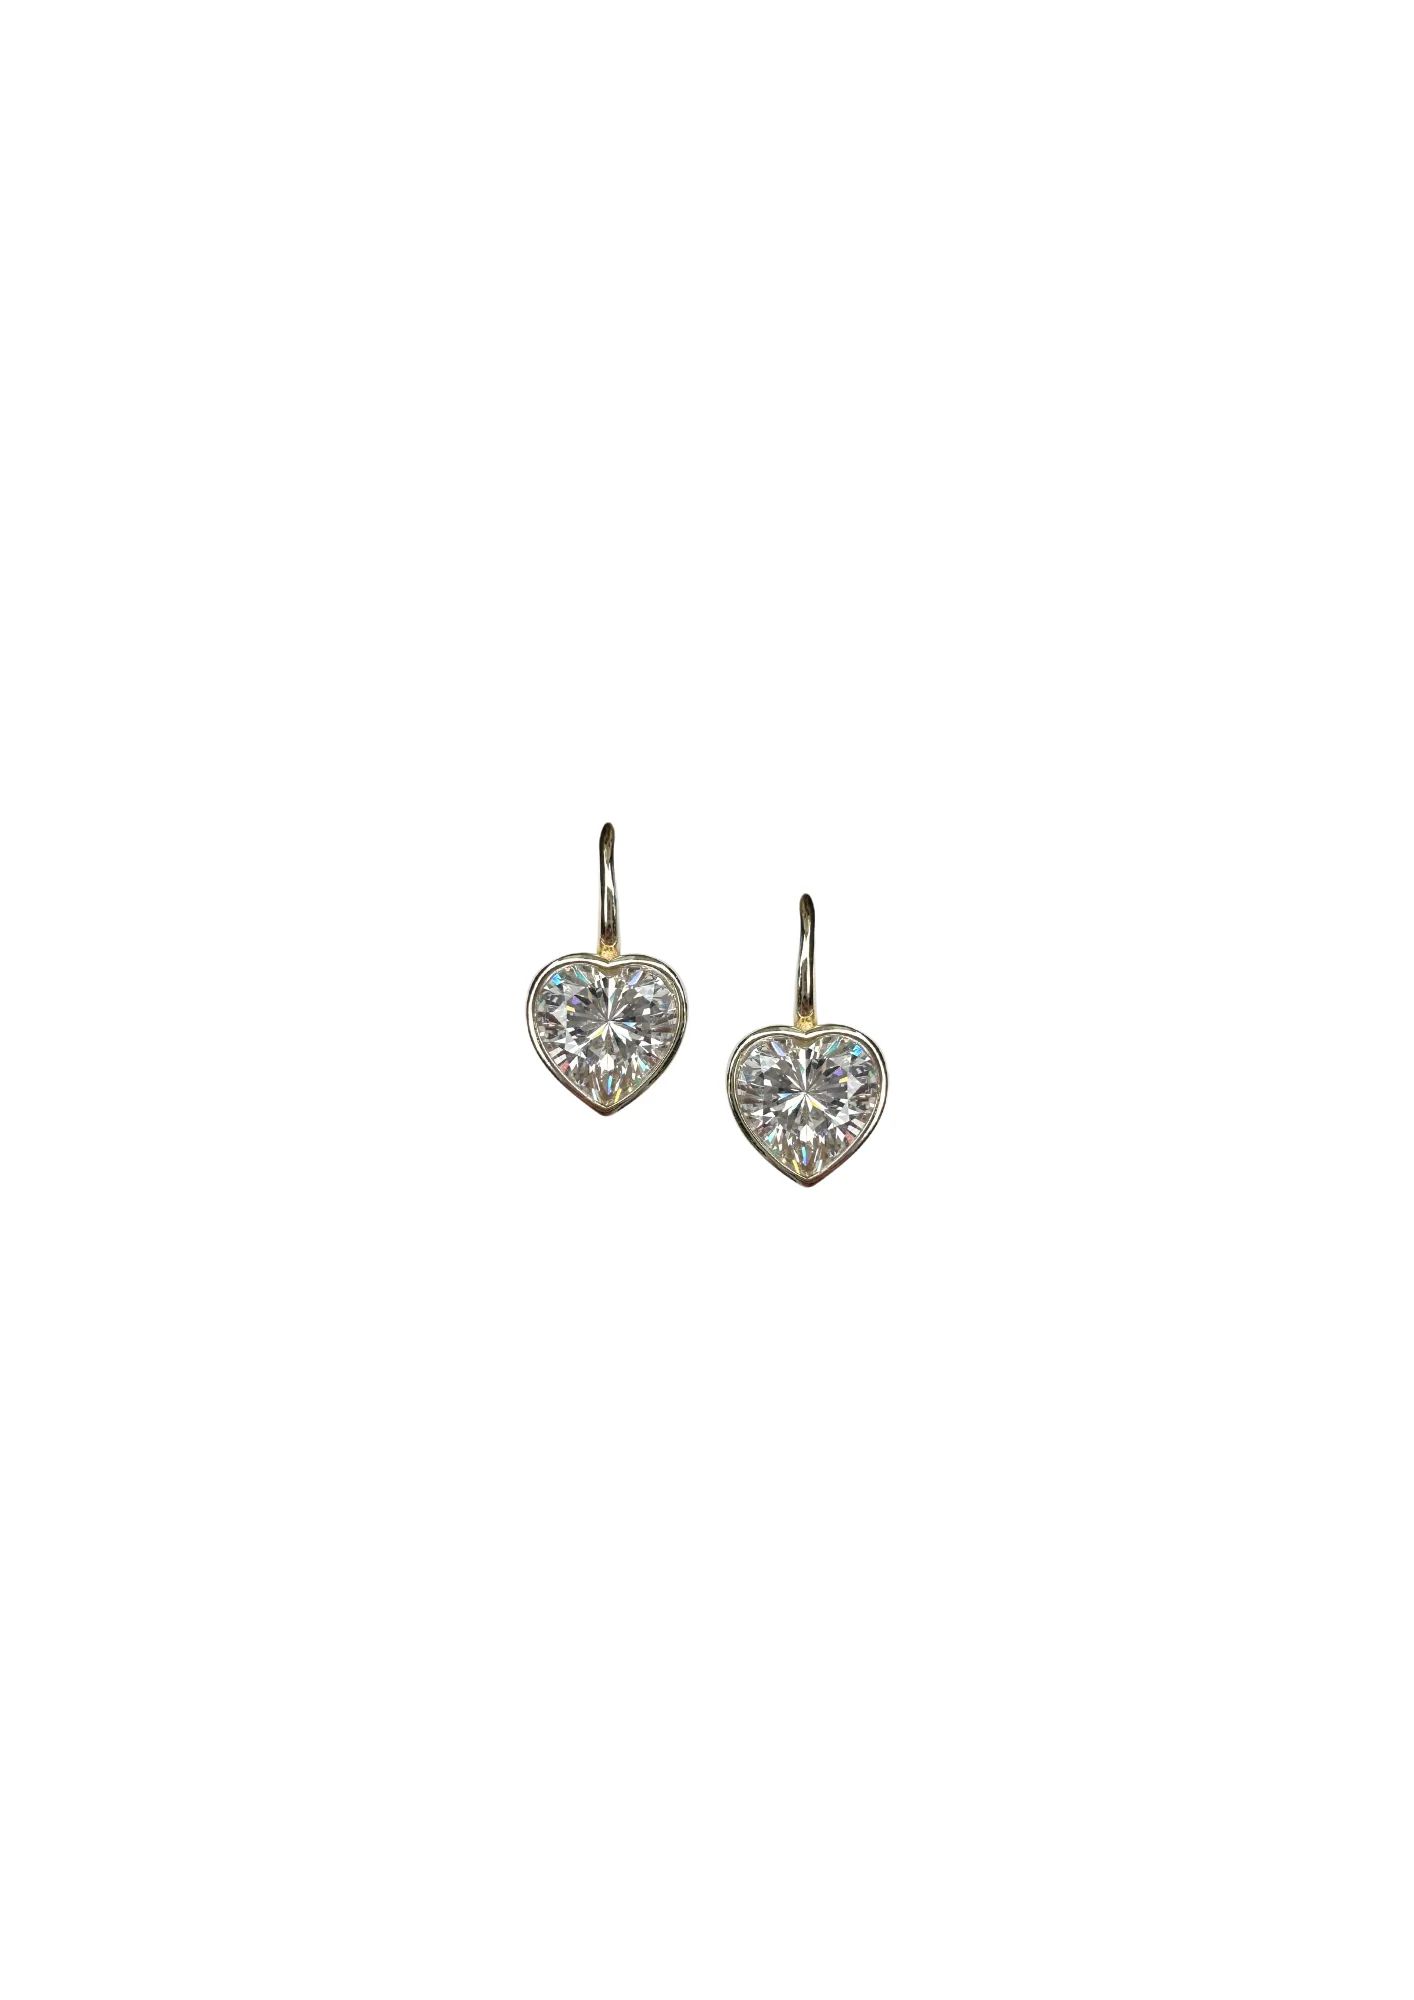 Blanc Bezel Heart Earwire | Nicola Bathie Jewelry